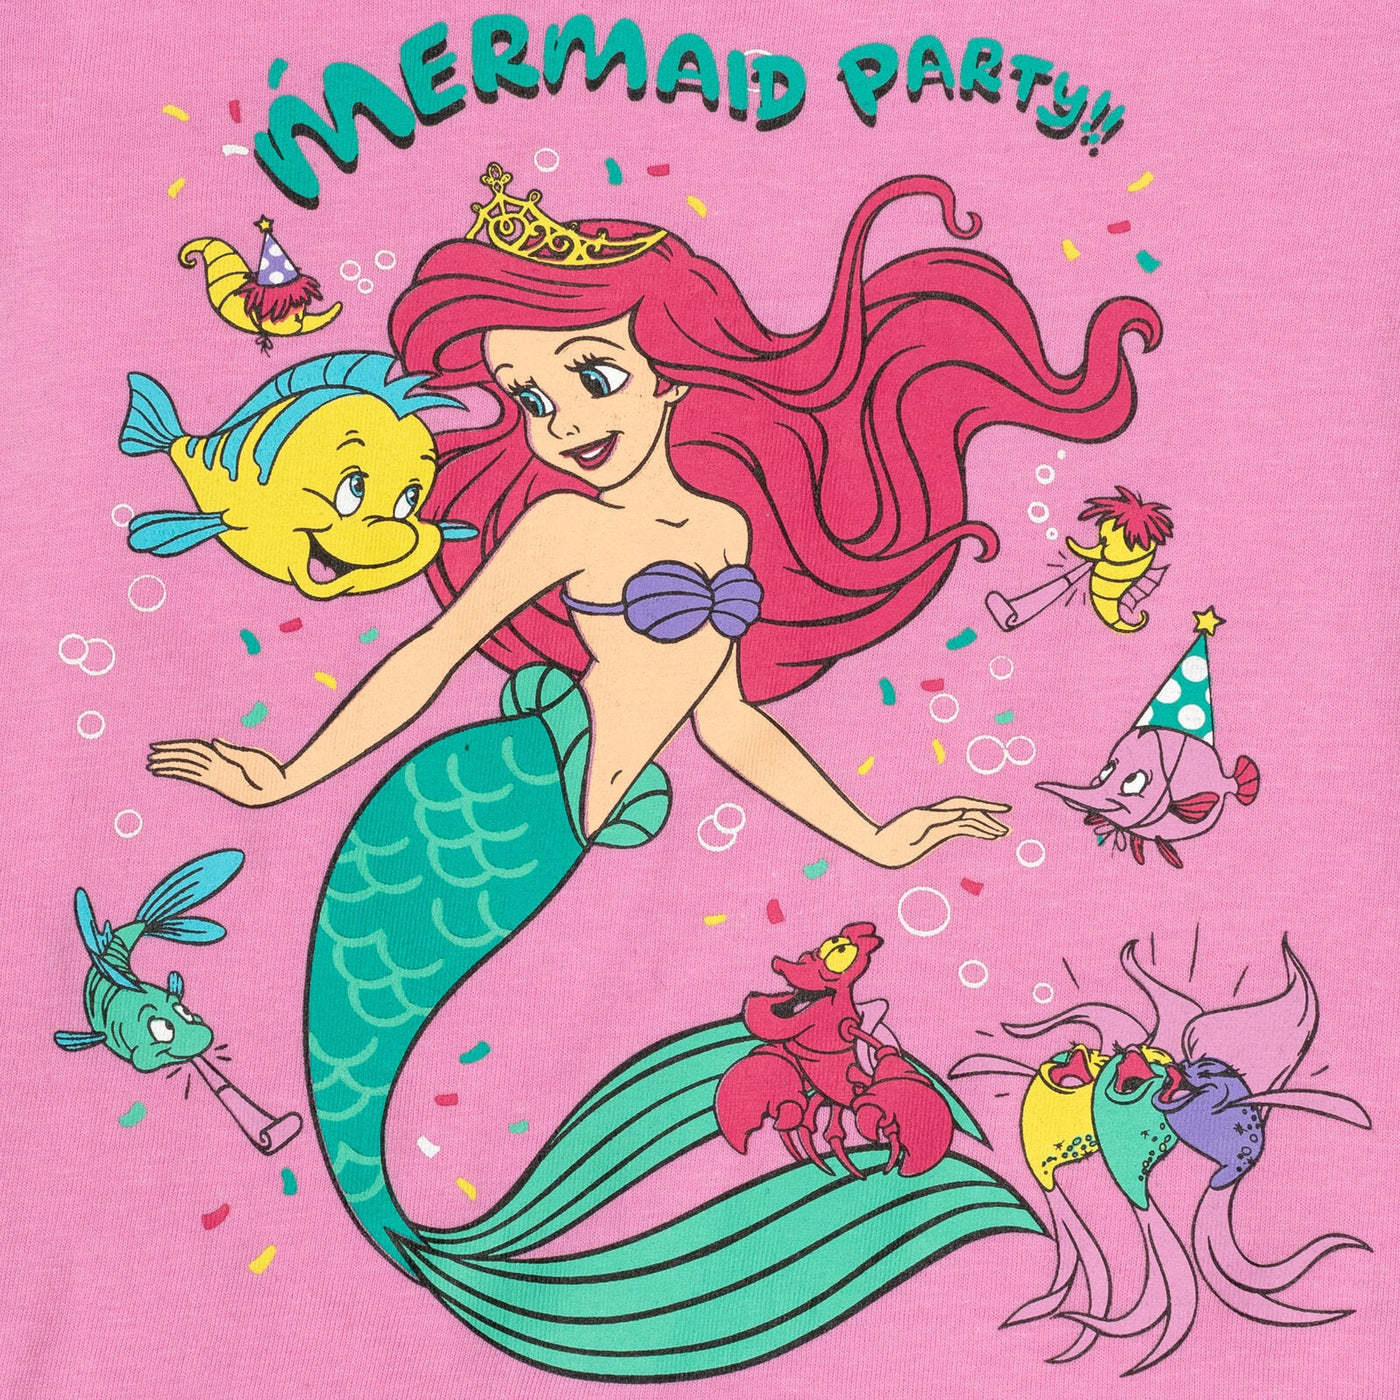 Disney The Little Mermaid Princess Ariel T-Shirt - imagikids